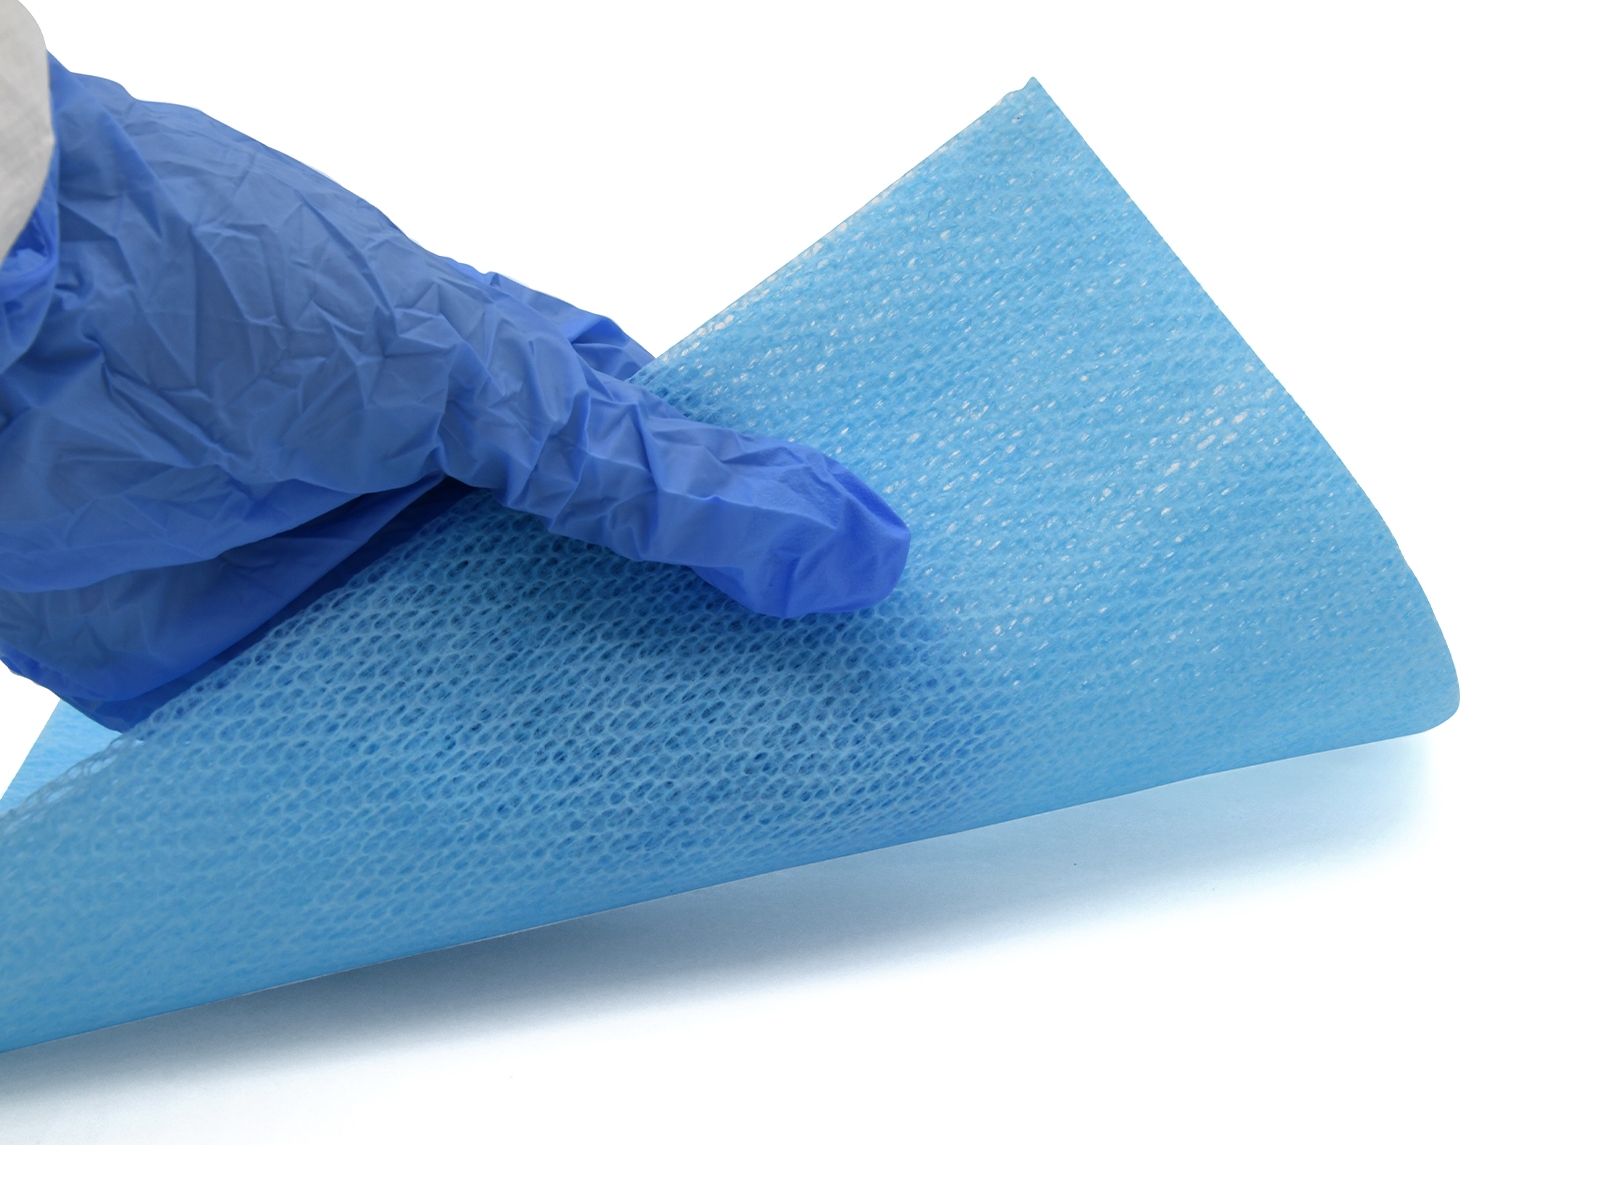 Automotive drying pad impregnated 43x31 cm - blue